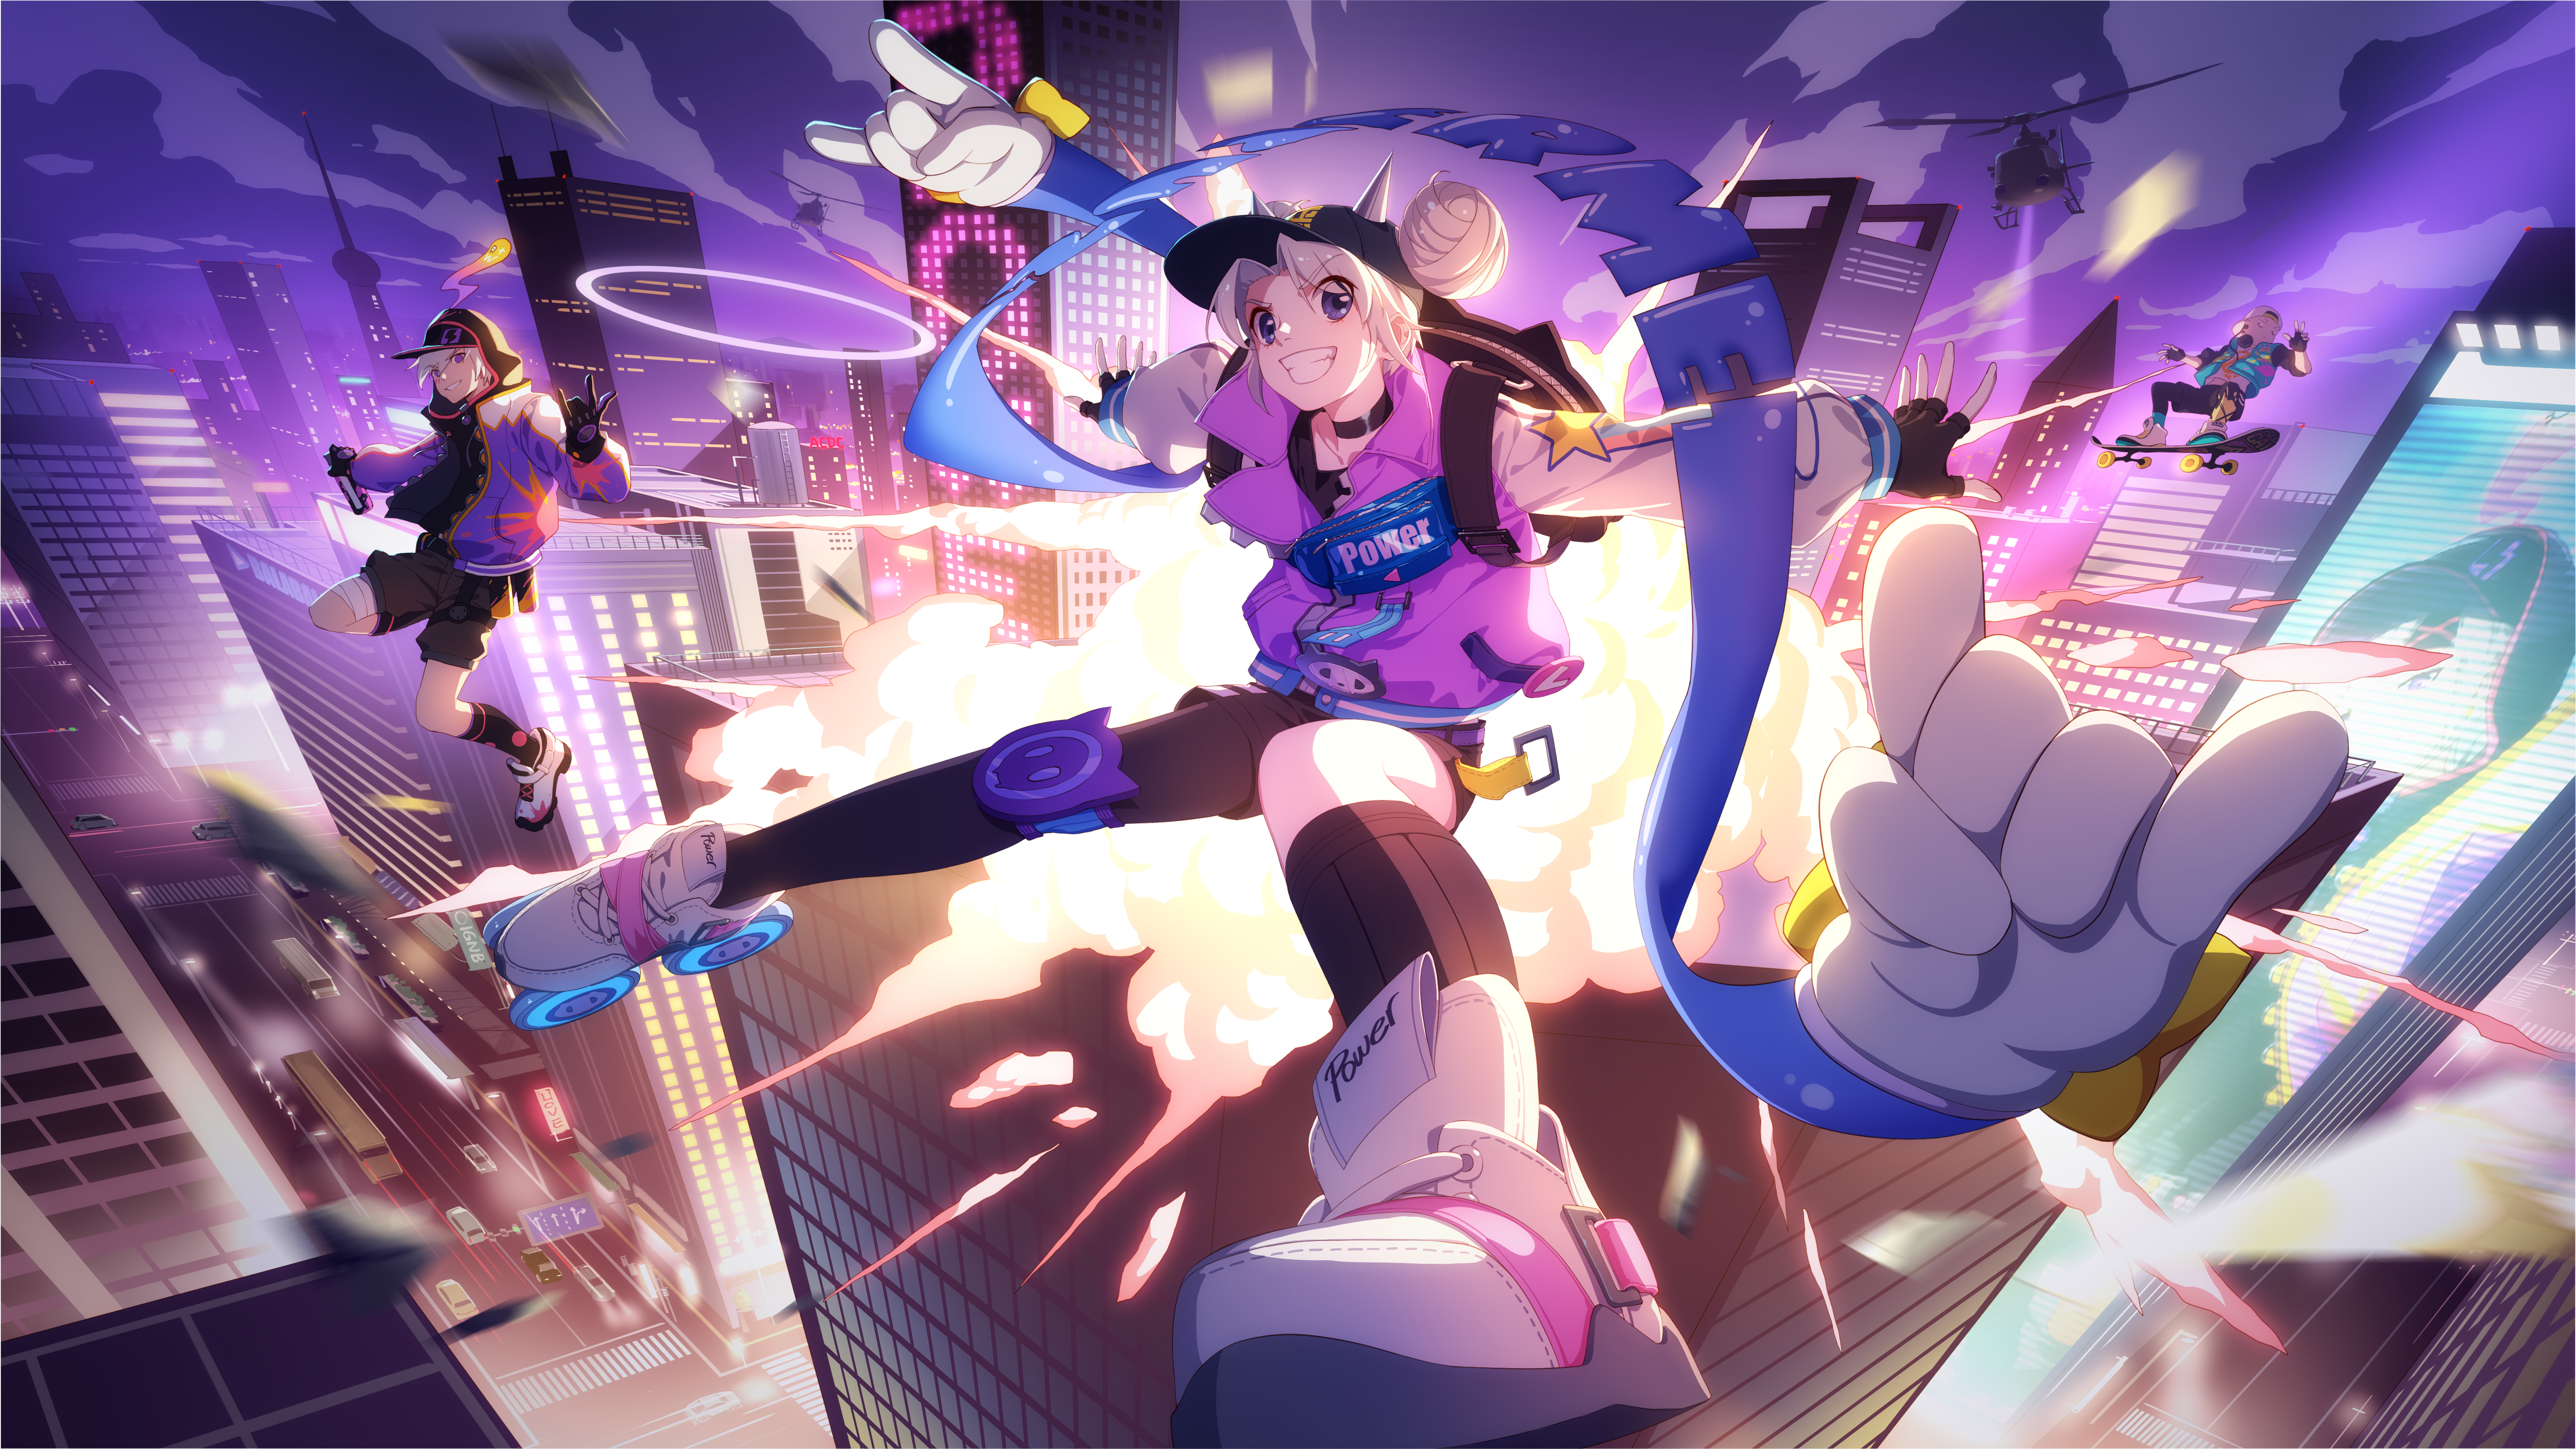 Anime Girls Anime Boys Silver Hair Smiling Science Fiction City Night Explosion Baseball Caps Skateb 5634x3169